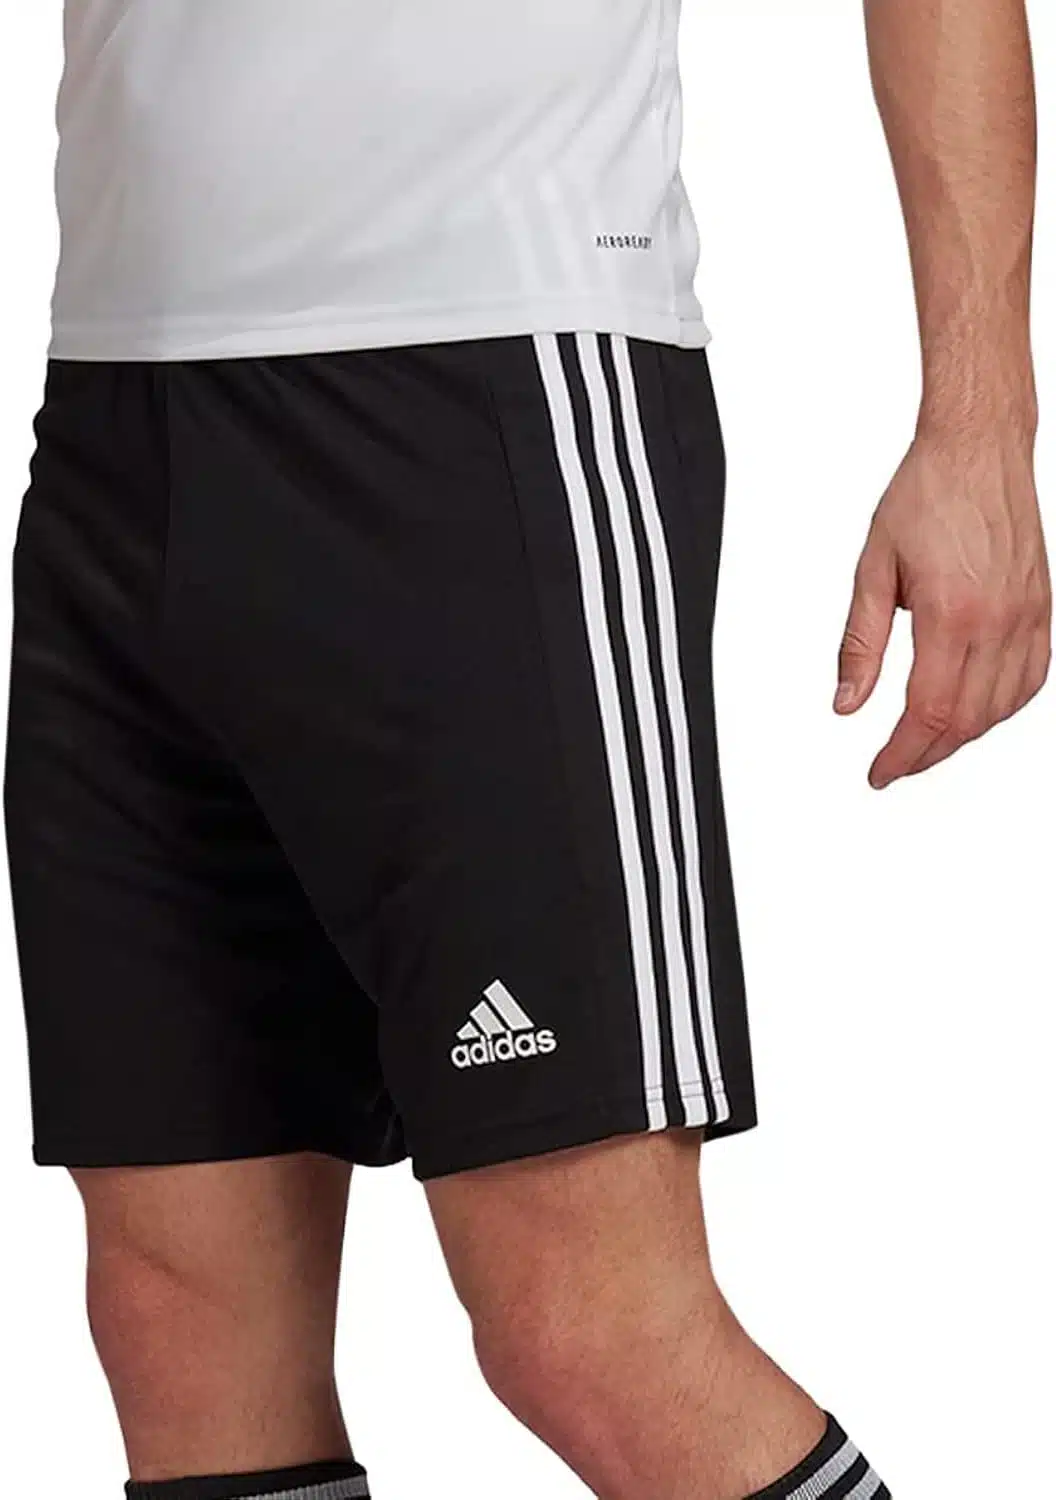 analise do shorts adidas masculino squadra 21 pretobranco gn5776 g